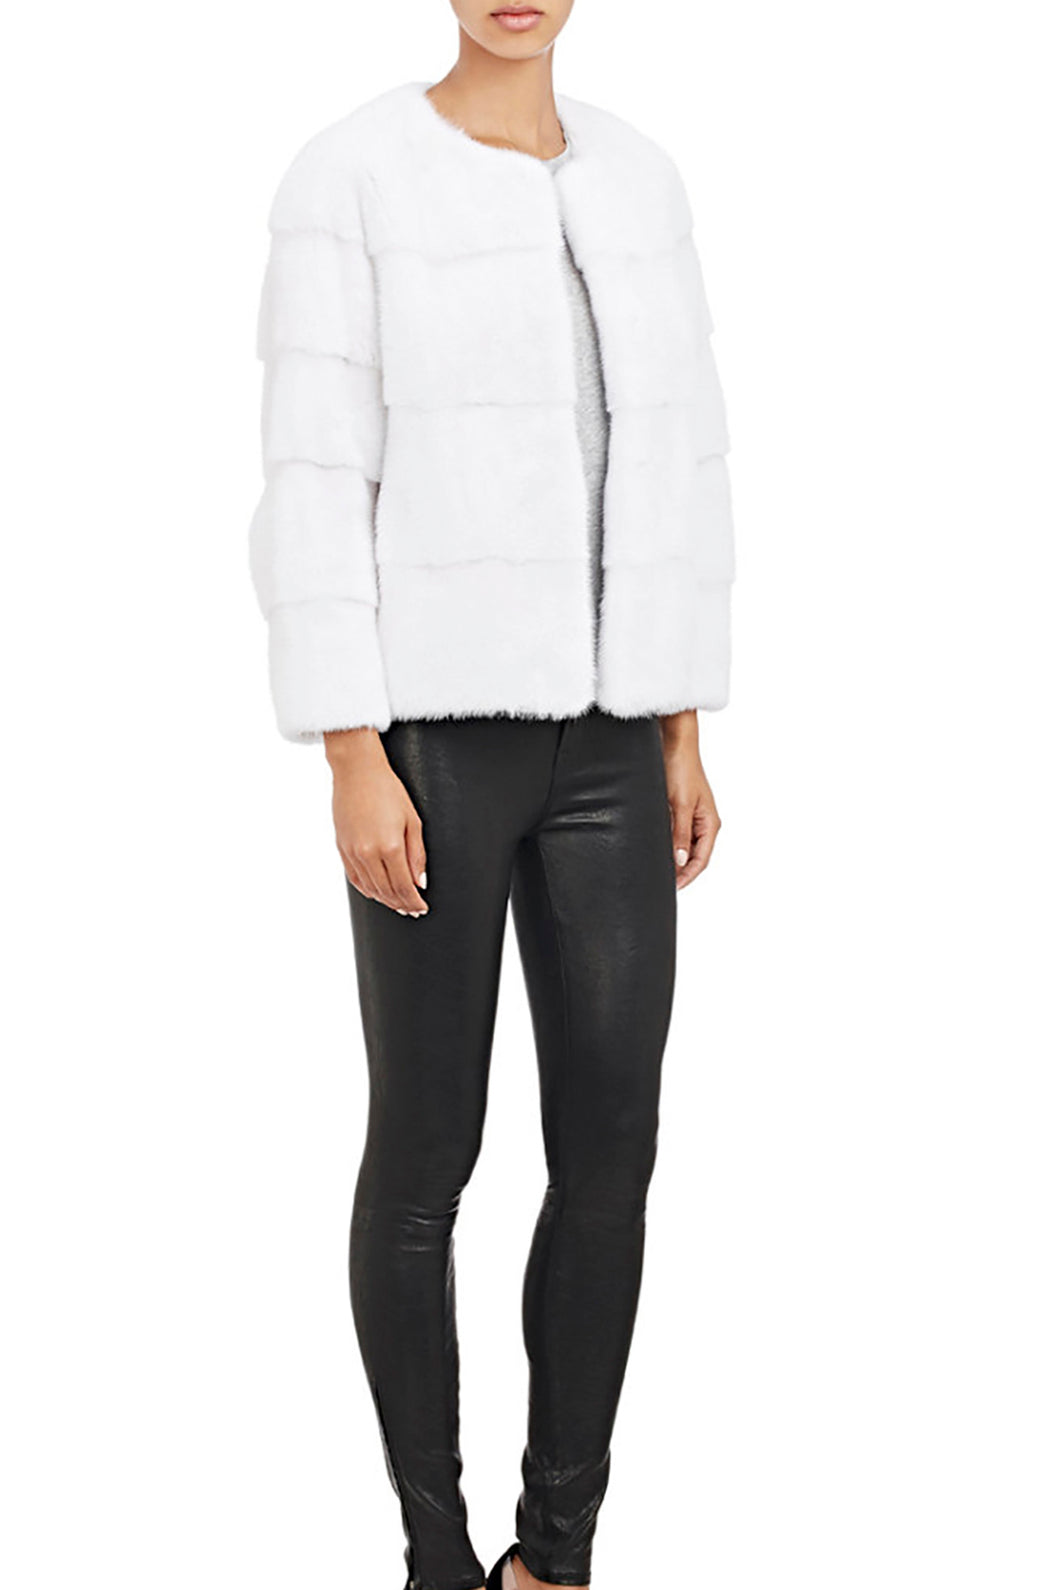 sarah womens mink jacket Bianco 2